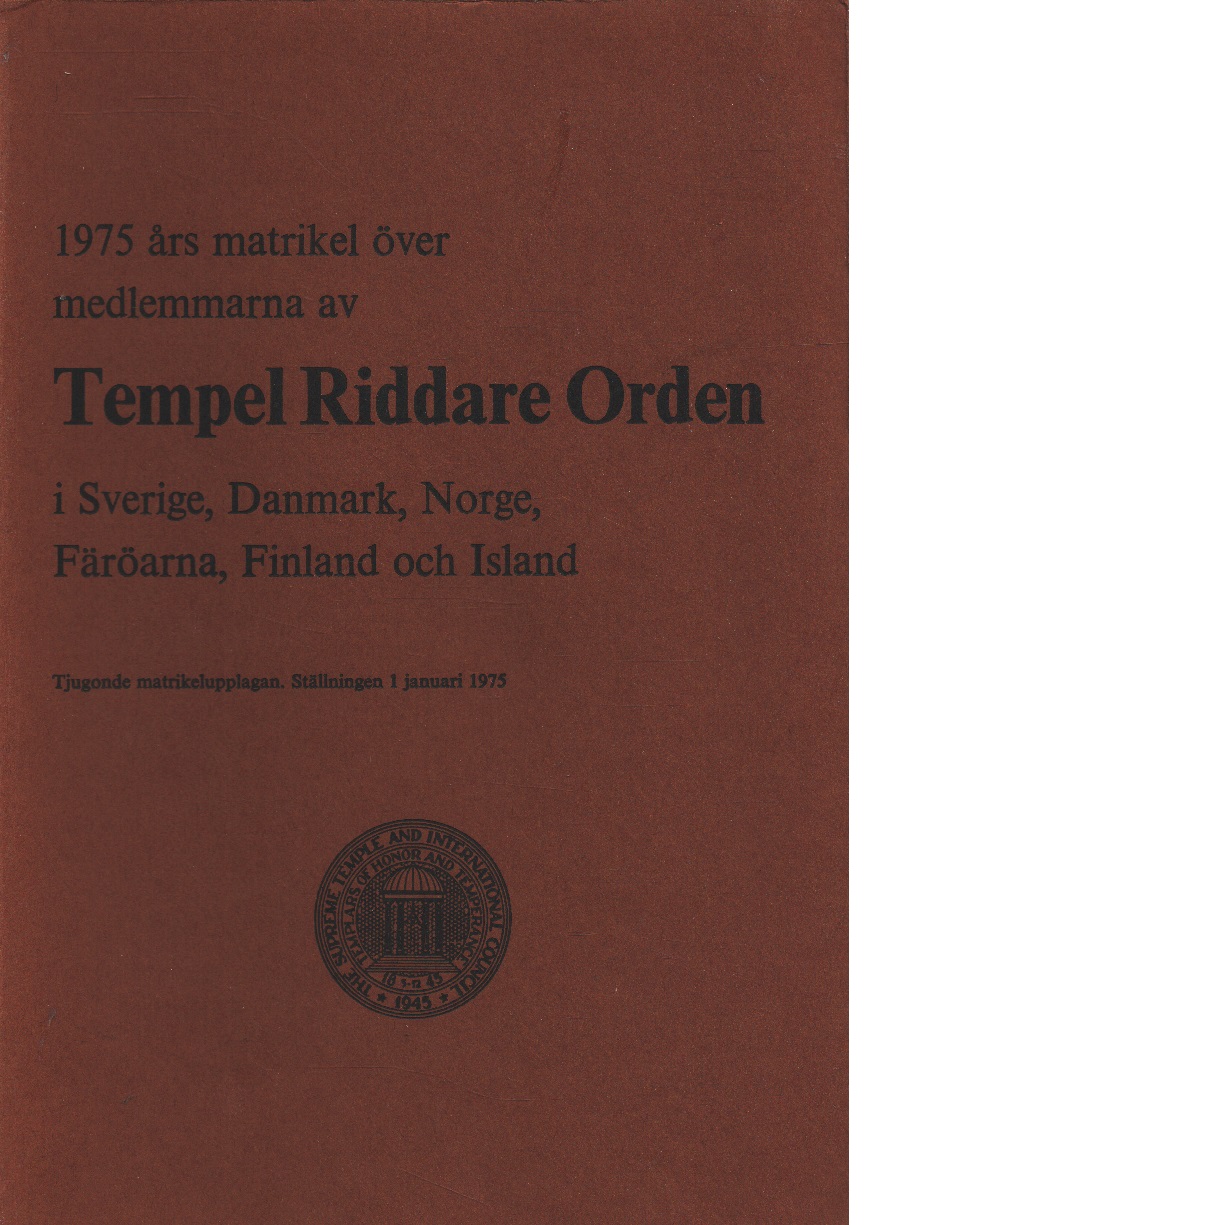 Matrikel 1975 Tempel Riddare Orden - Council Supreme